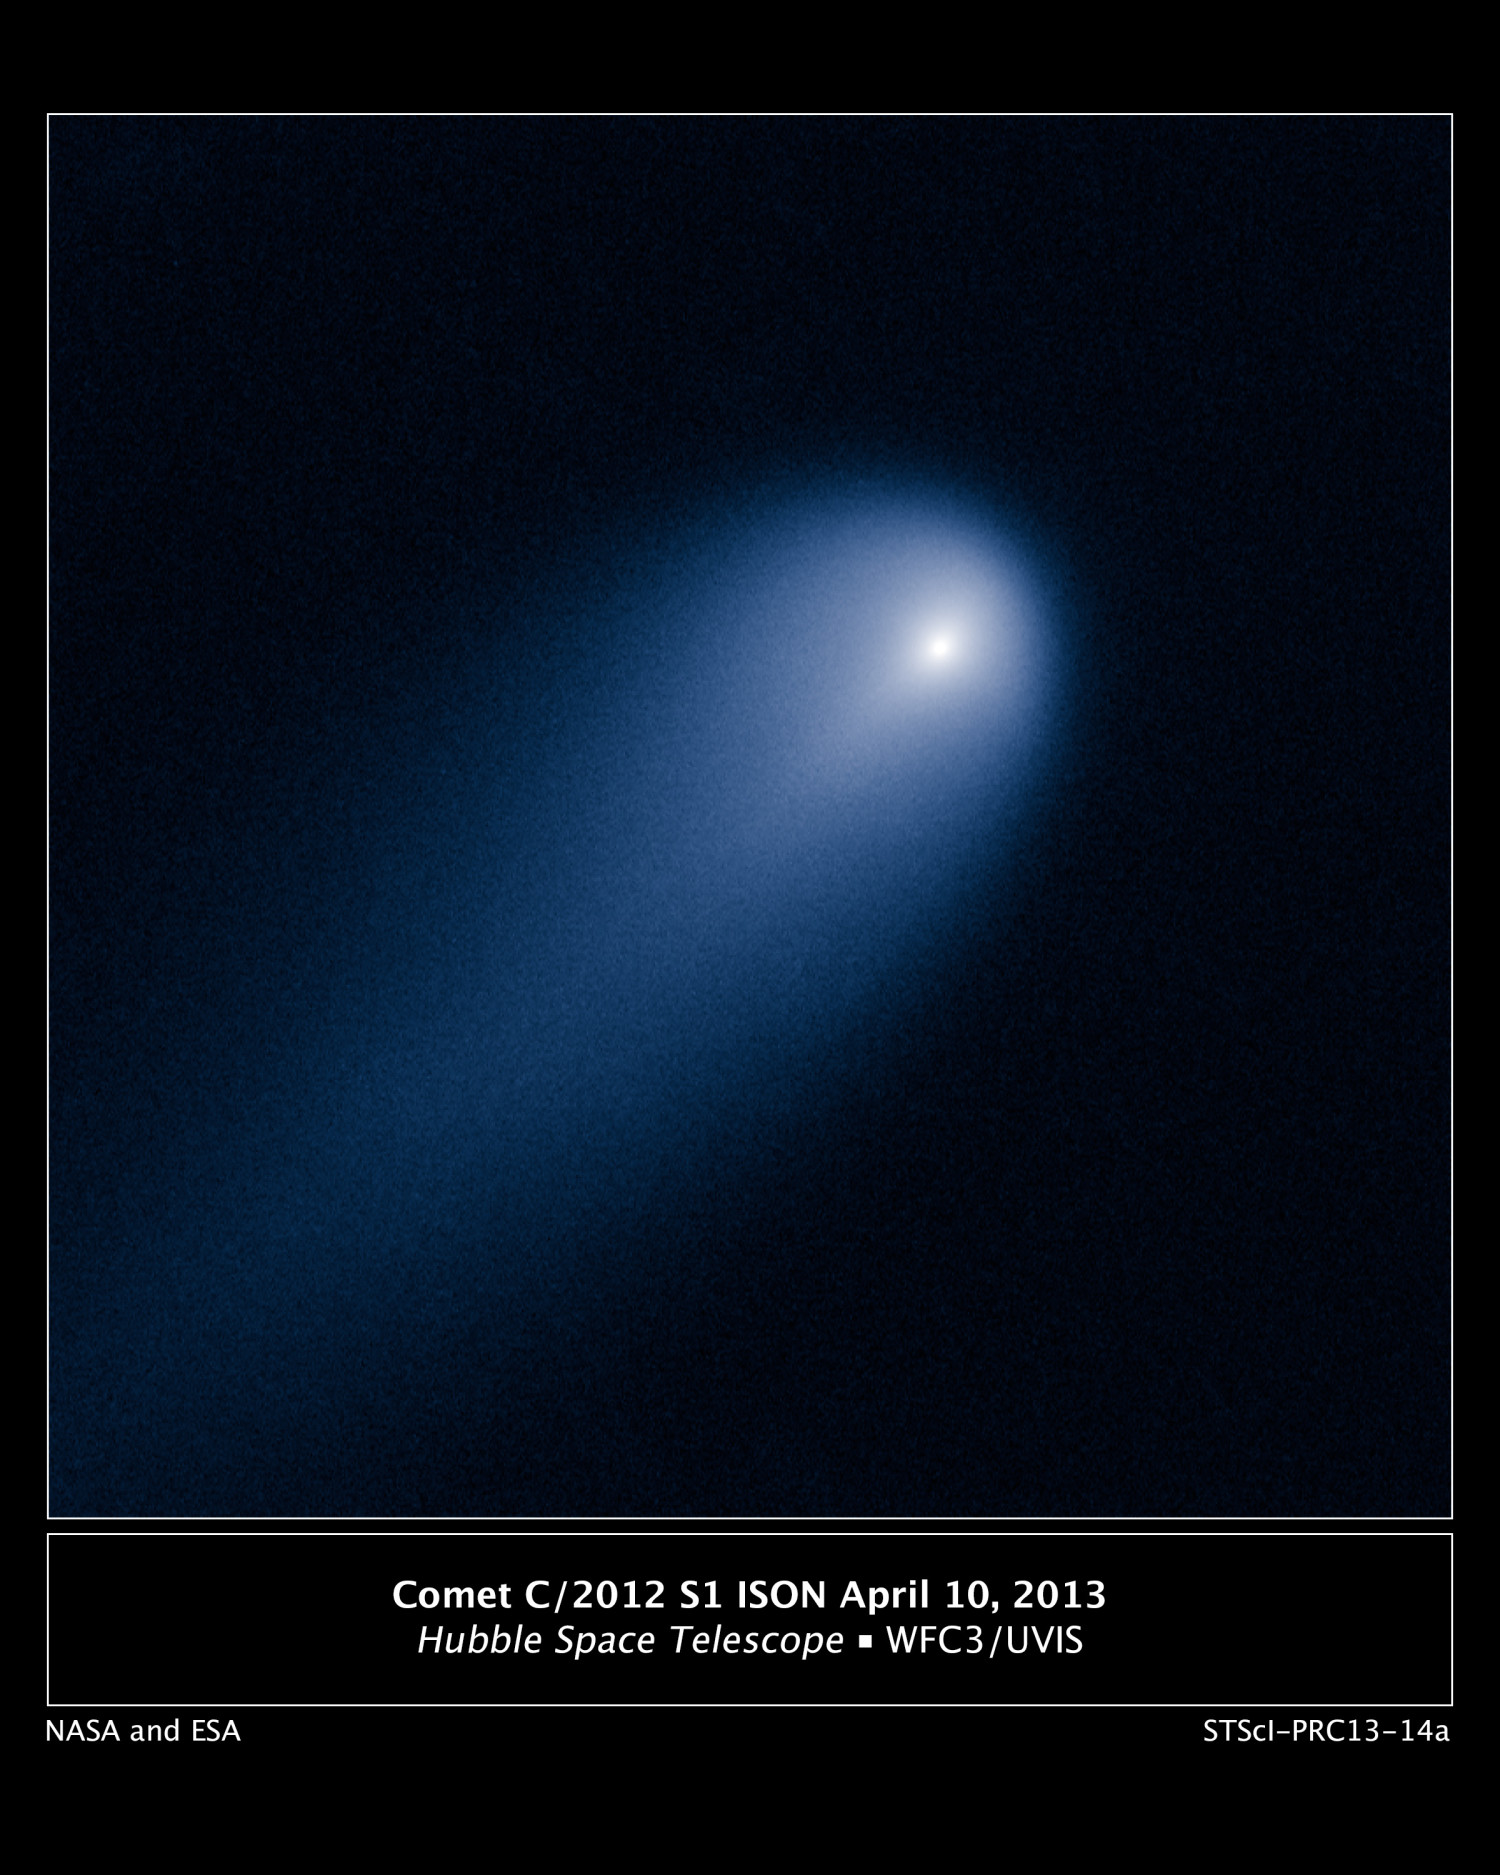 comet ISON